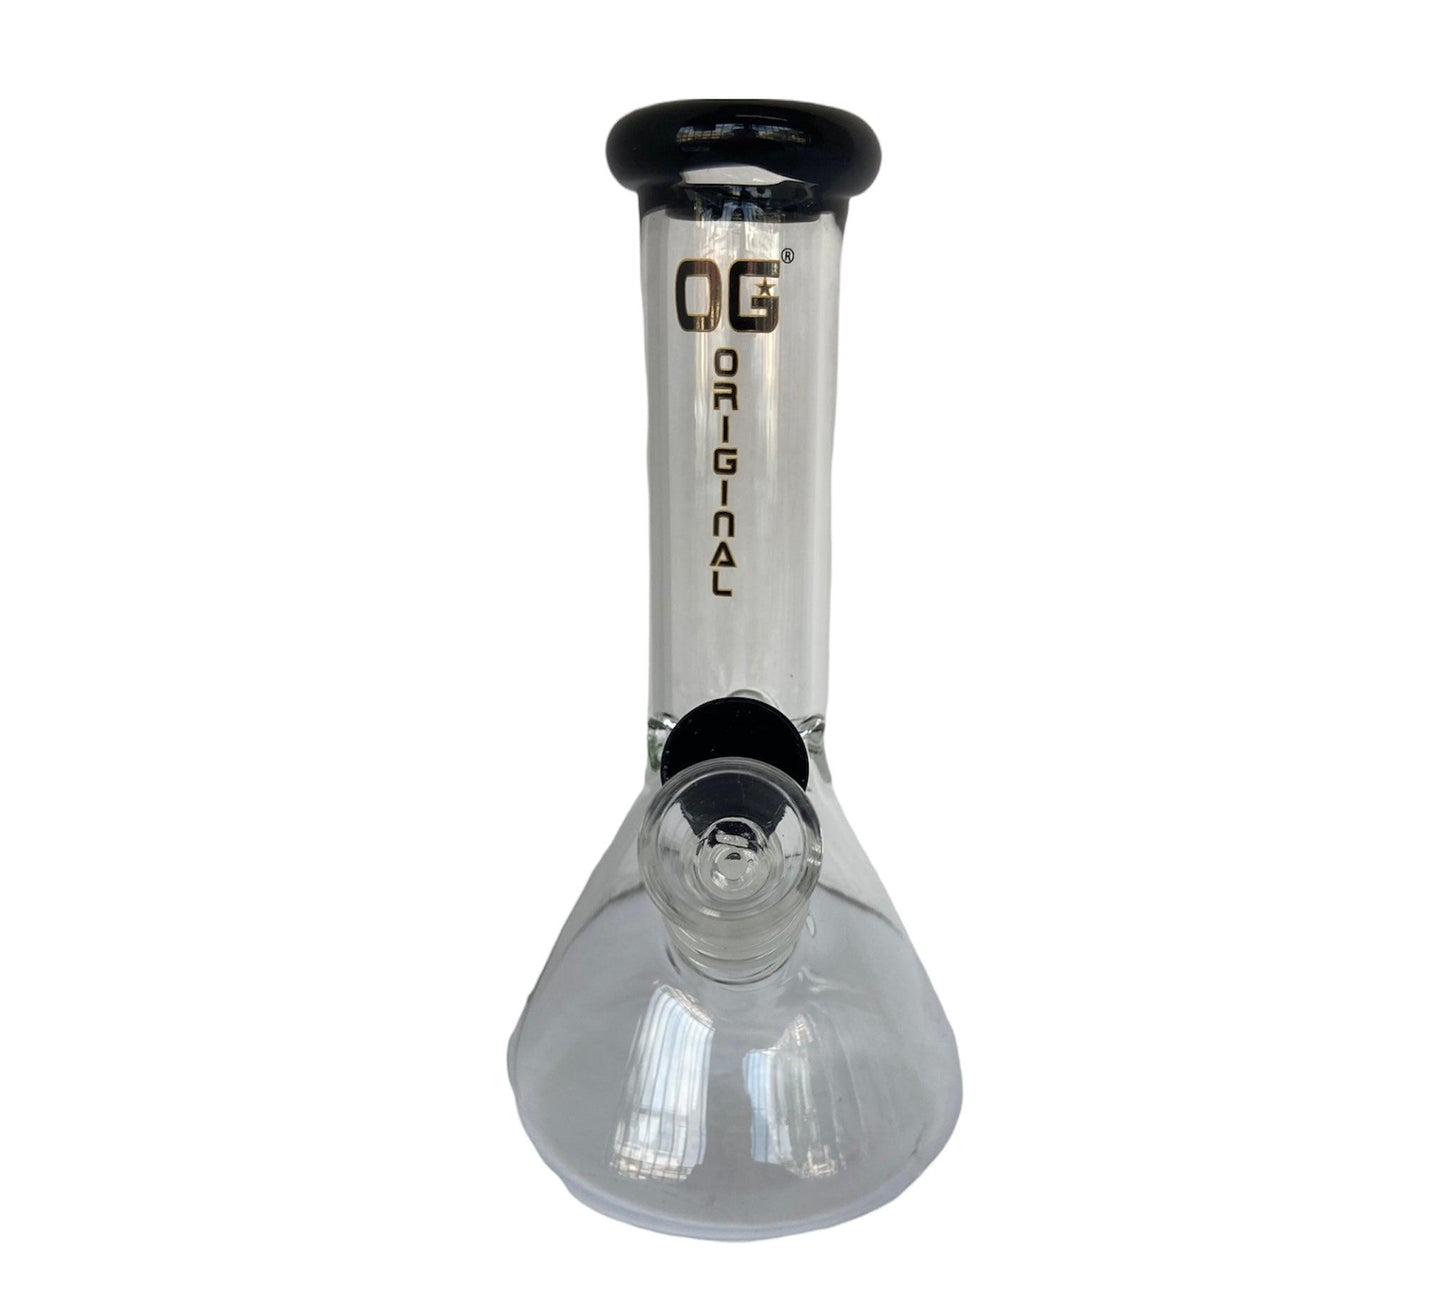 Black OG Mini Beaker Bong (8") - Glass Bong - The Wee Smoke Shop